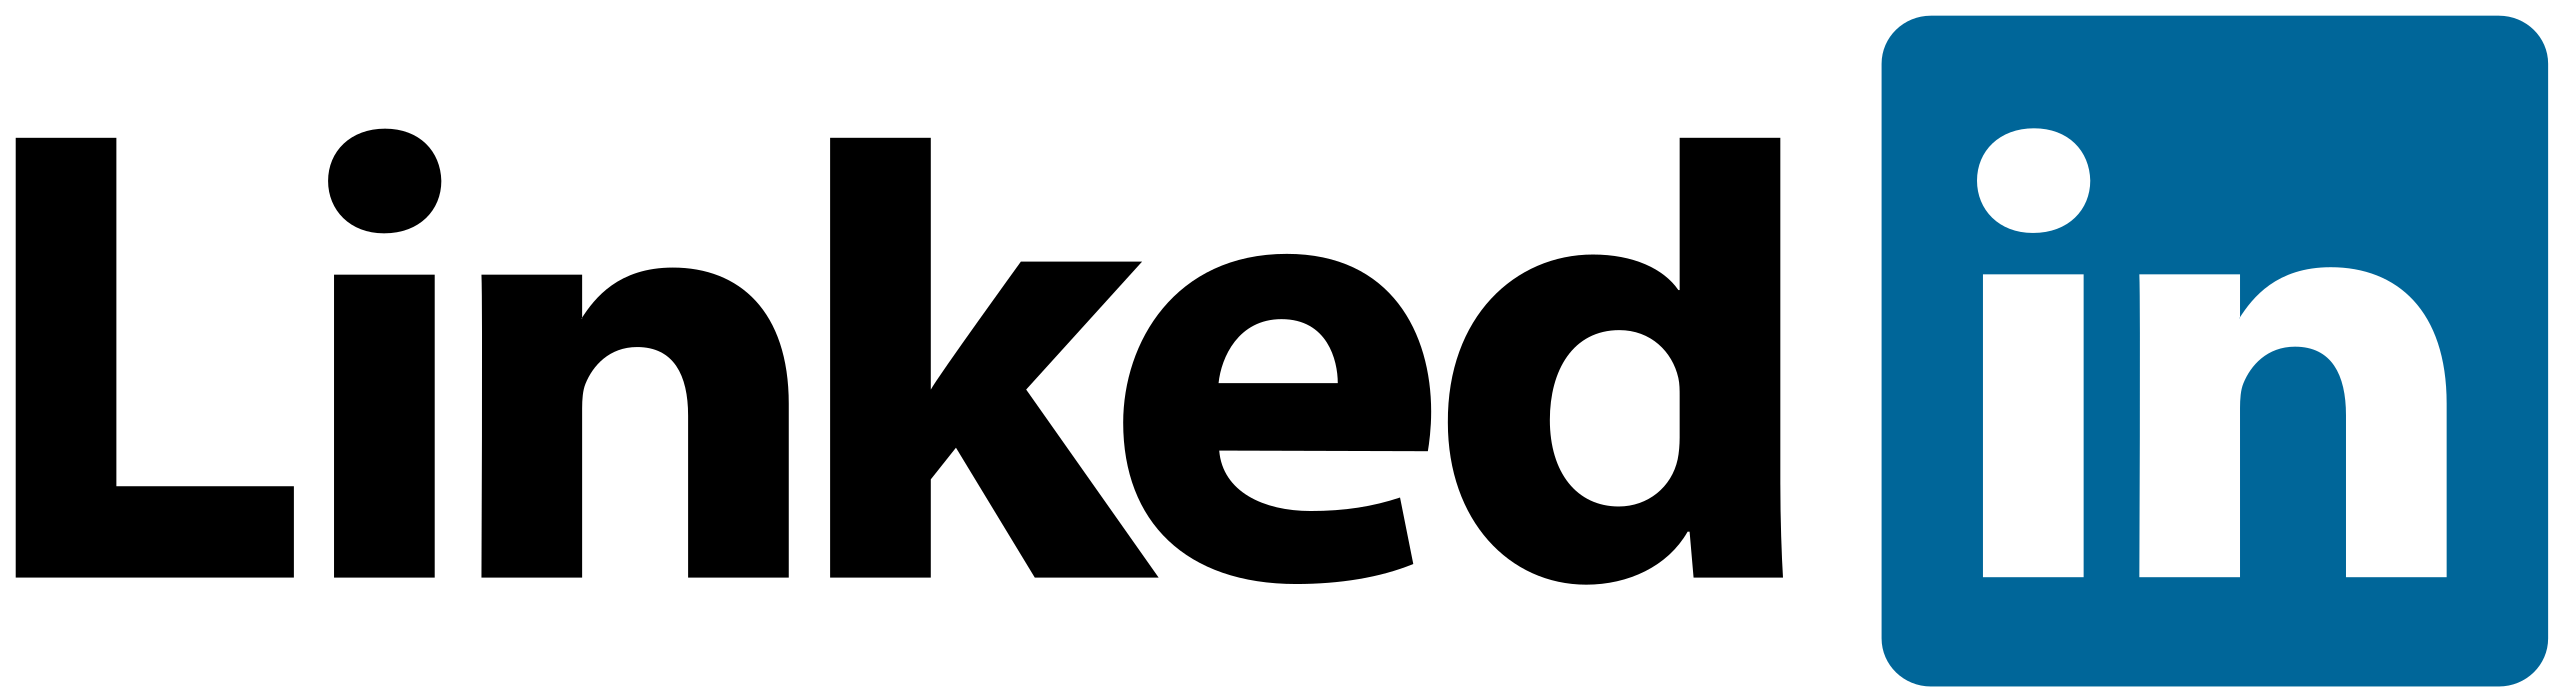 Linkedin logo.svg